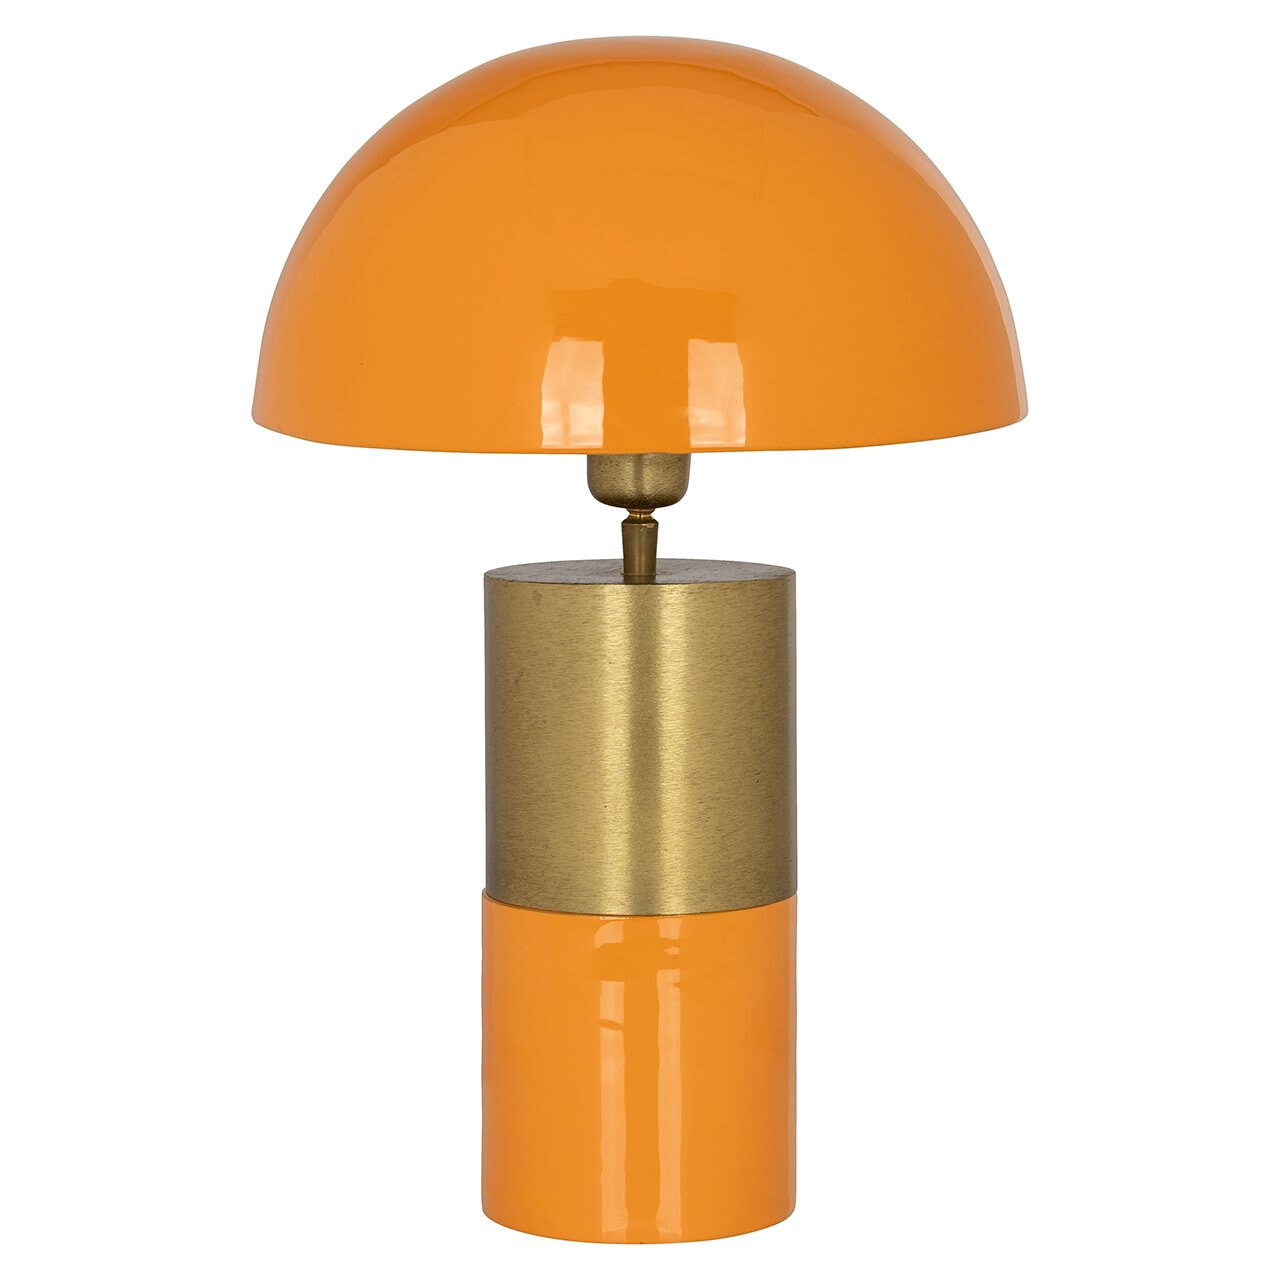 Richmond Tafellamp Twilla 45cm hoog - Oranje/Goud